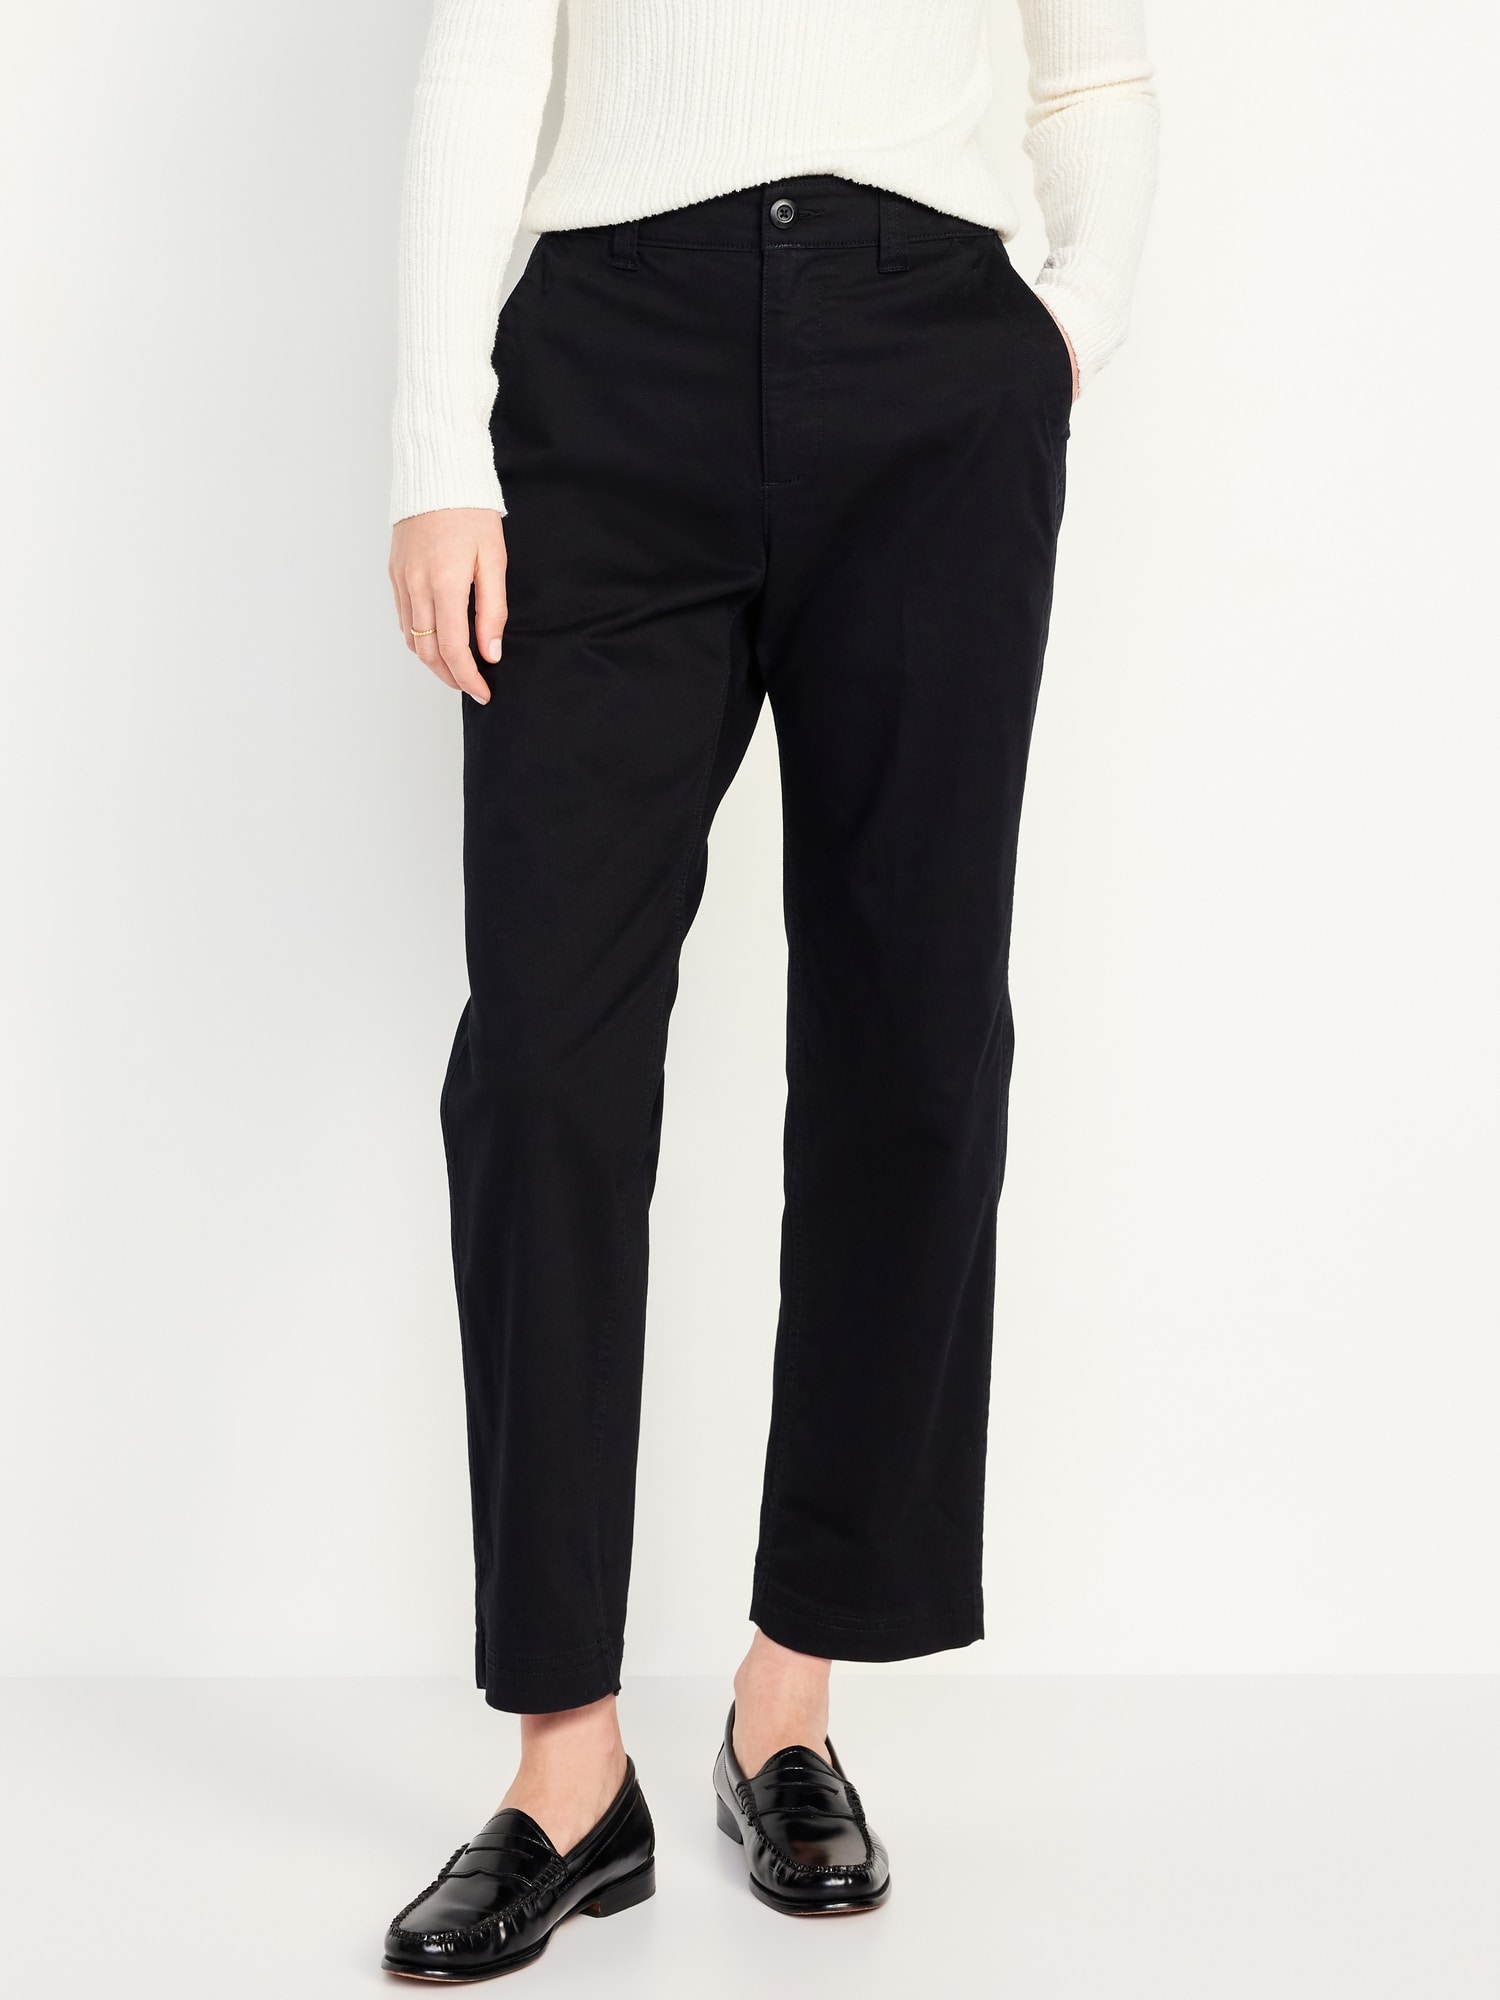 Old Navy Skinny Khaki Pants Black Full Length Womens Size 4 Petite